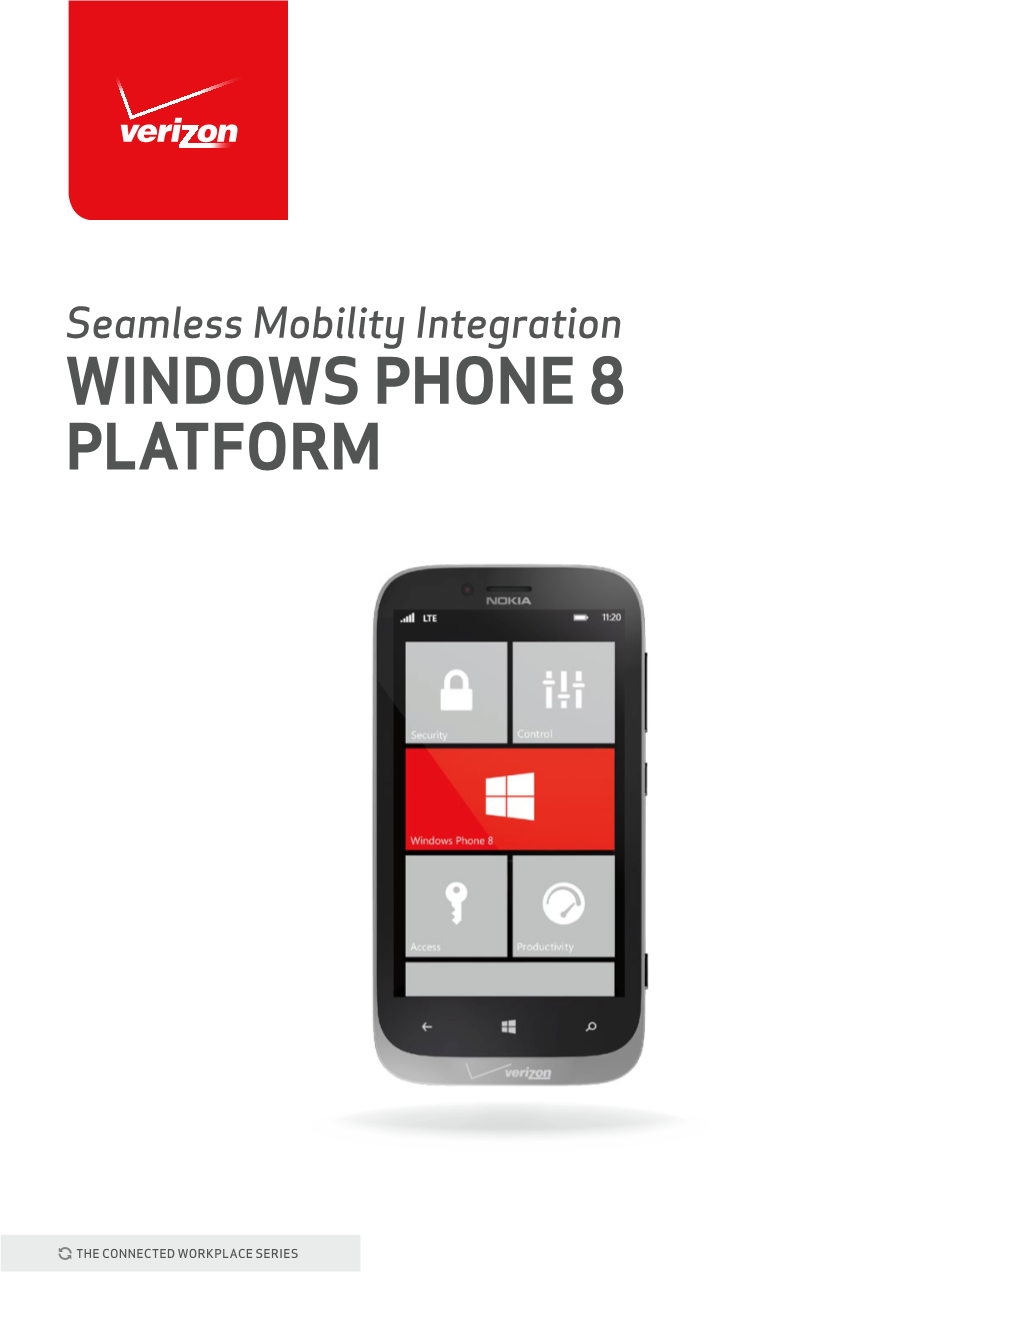 Windows Phone 8 Platform